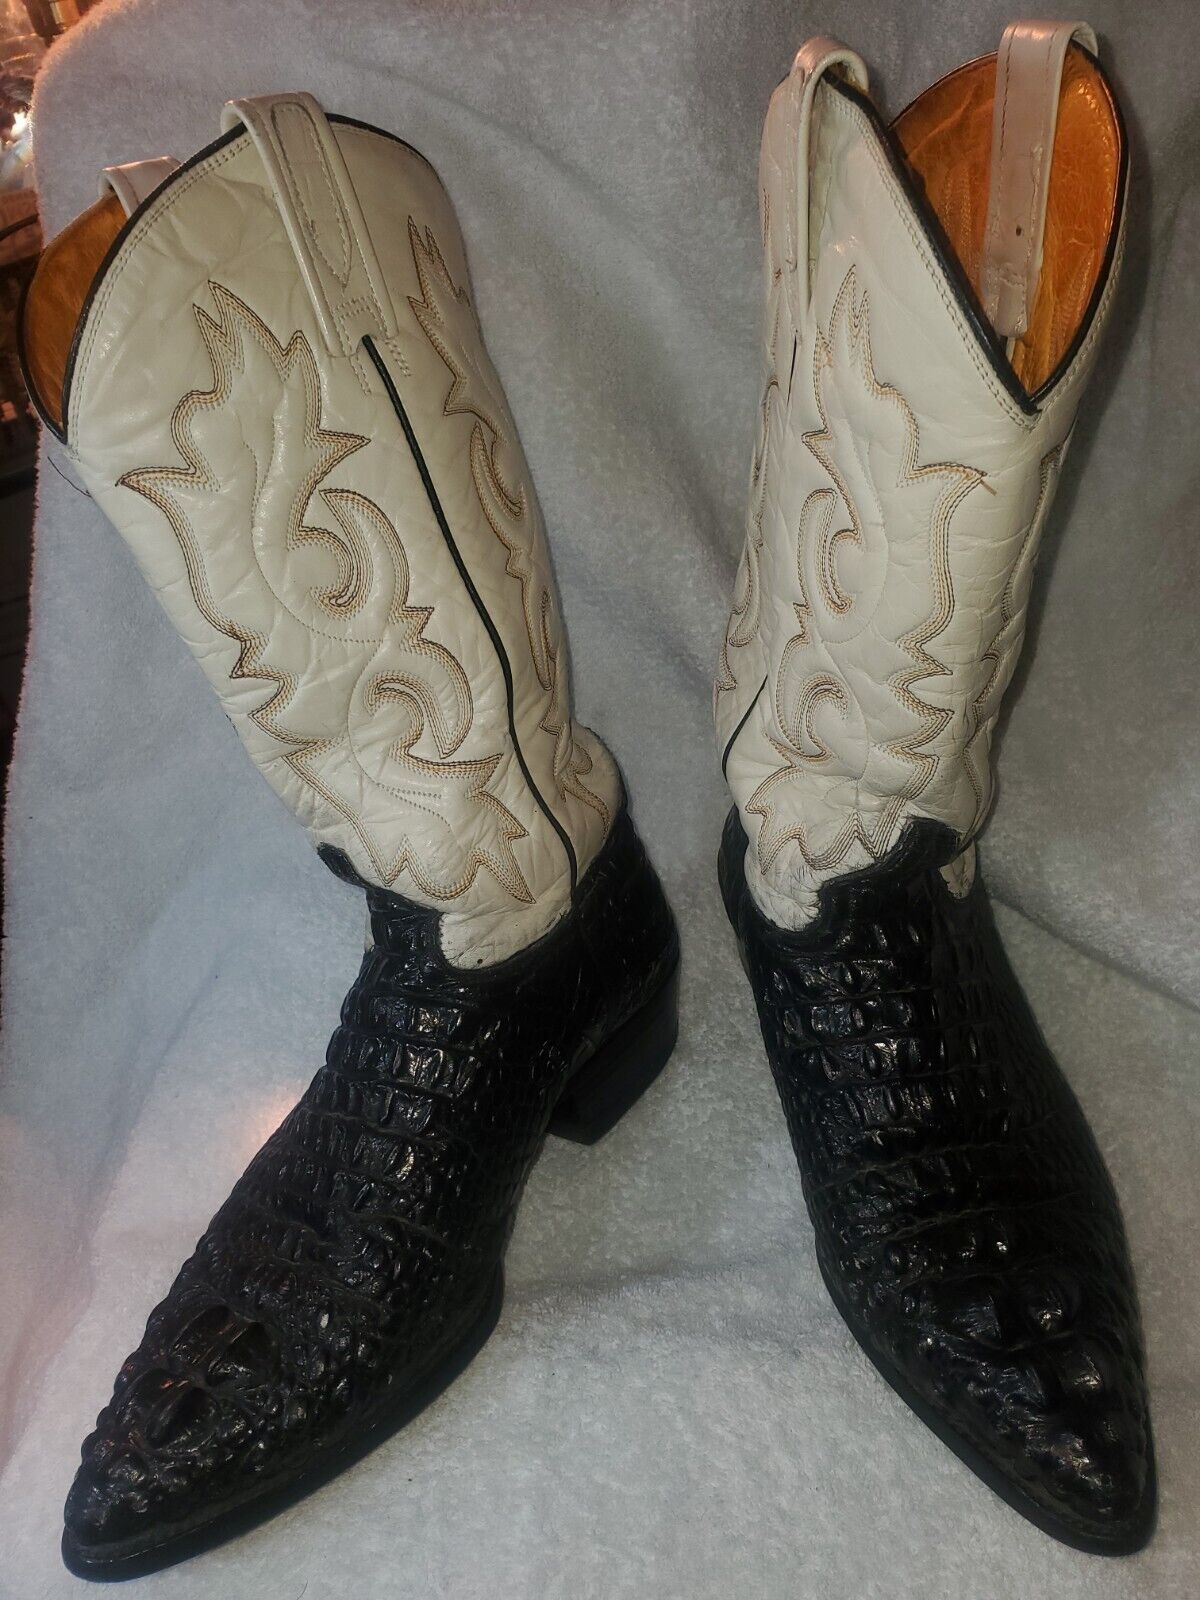 Botas Jaca Men Leather Cowboy Boots Size 27.5/8.5 Ostrich Pattern eBay